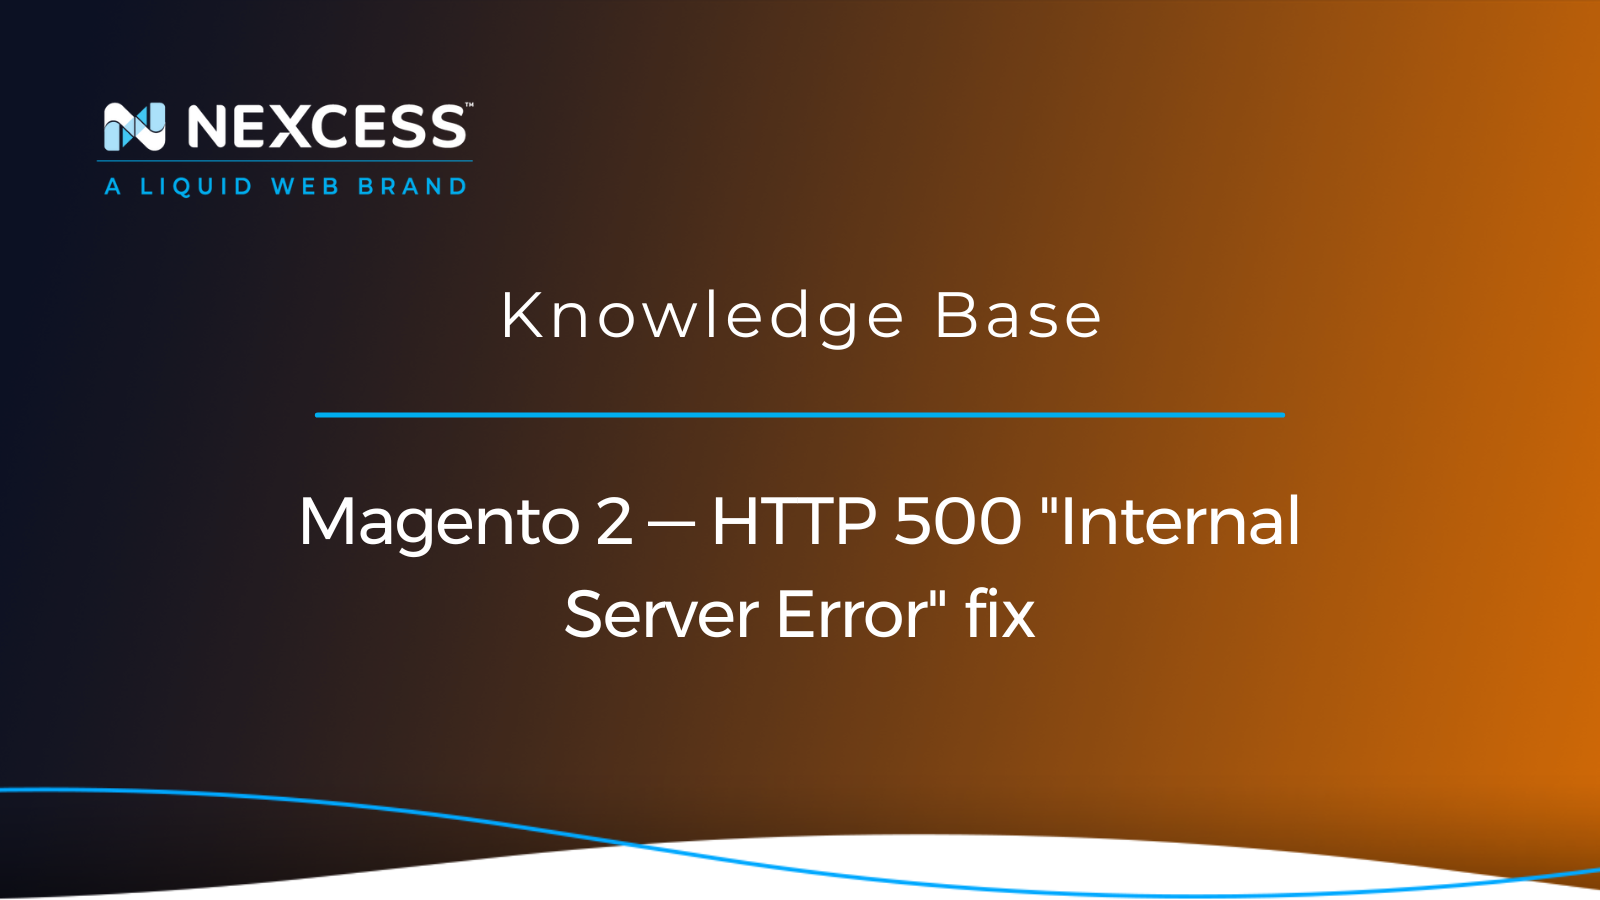 Magento 2 — HTTP 500 "Internal Server Error" fix